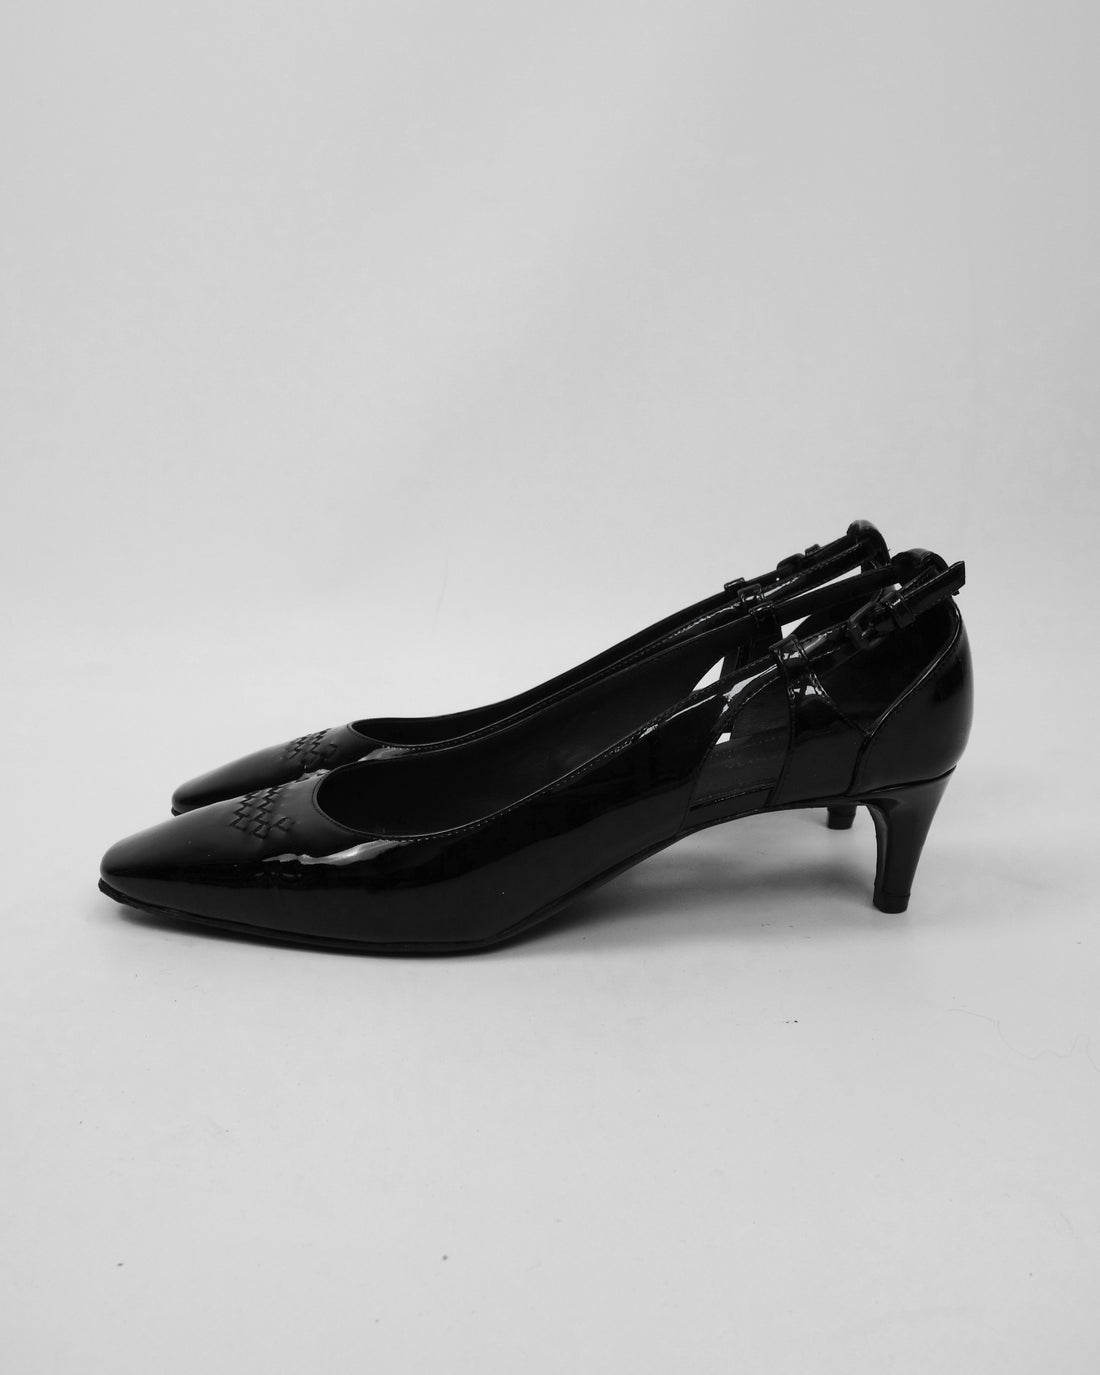 Bottega Veneta Black Patent Leather Heels 2000's